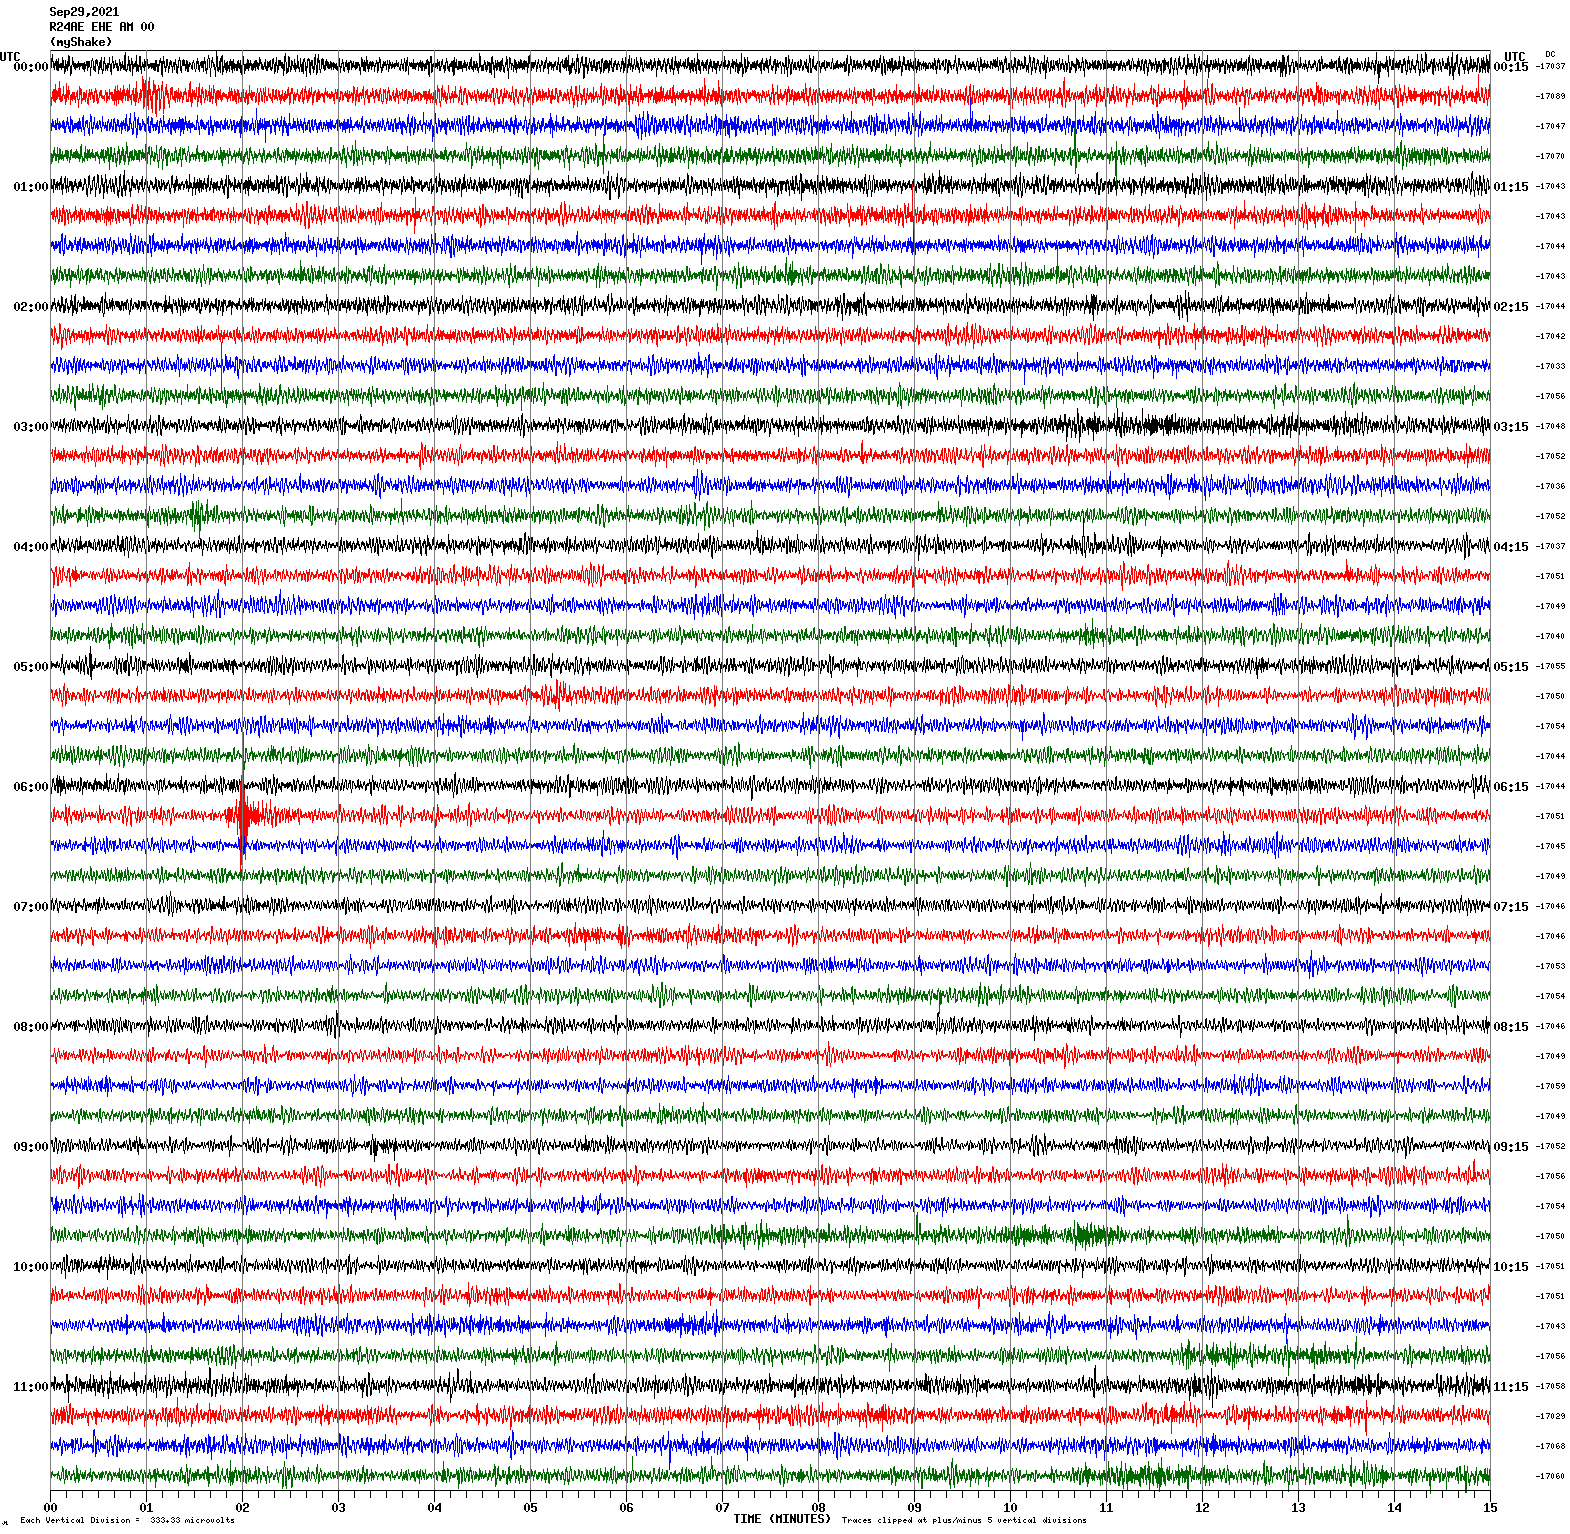 /seismic-data/R24AE/R24AE_EHE_AM_00.2021092900.gif